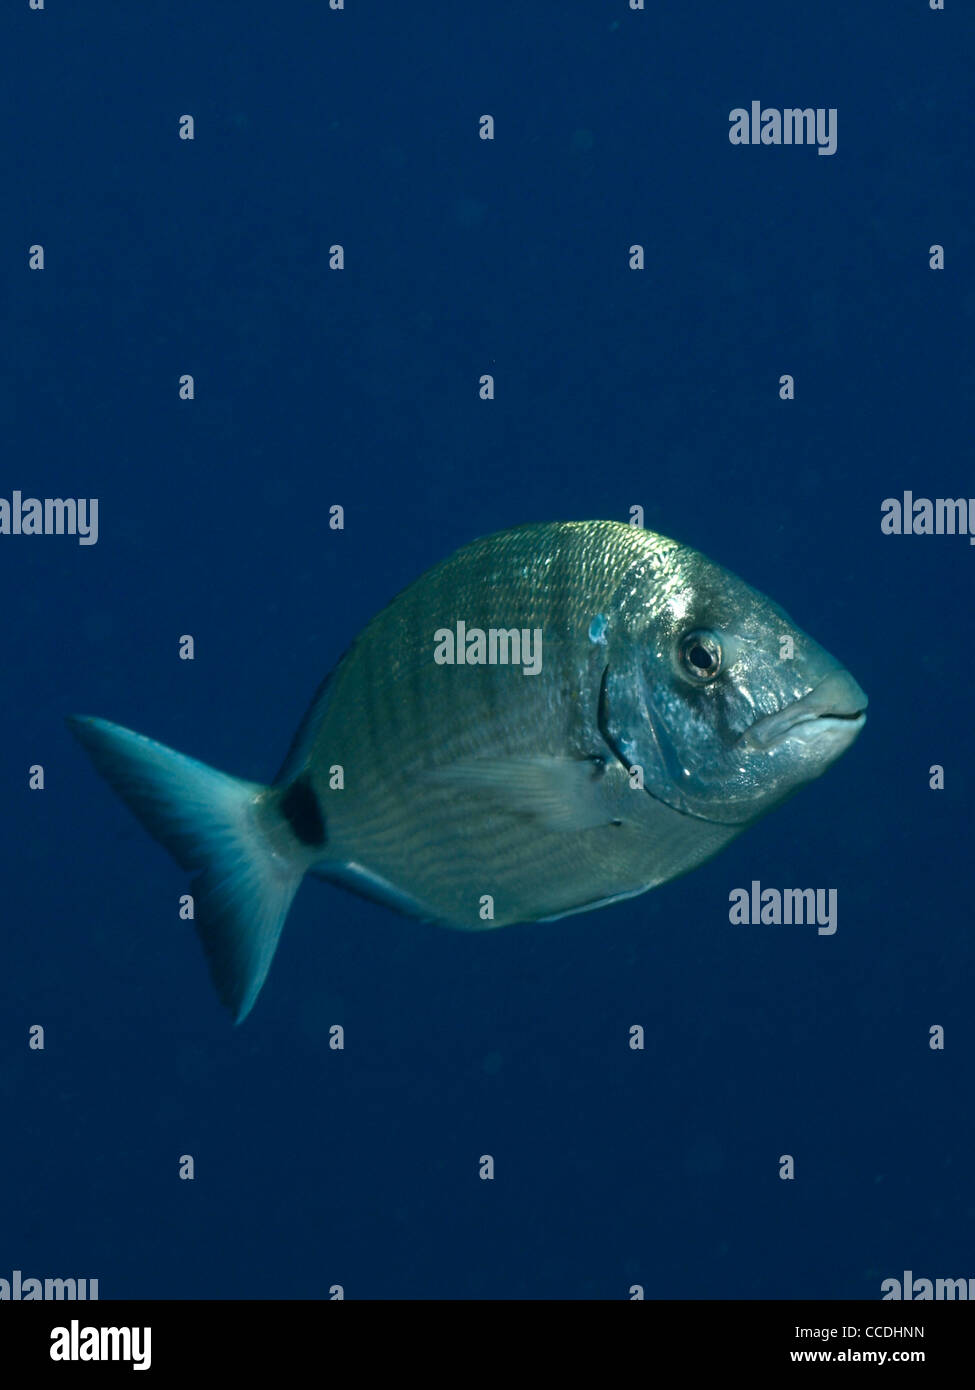 sargus fish in the mediterranean Stock Photo